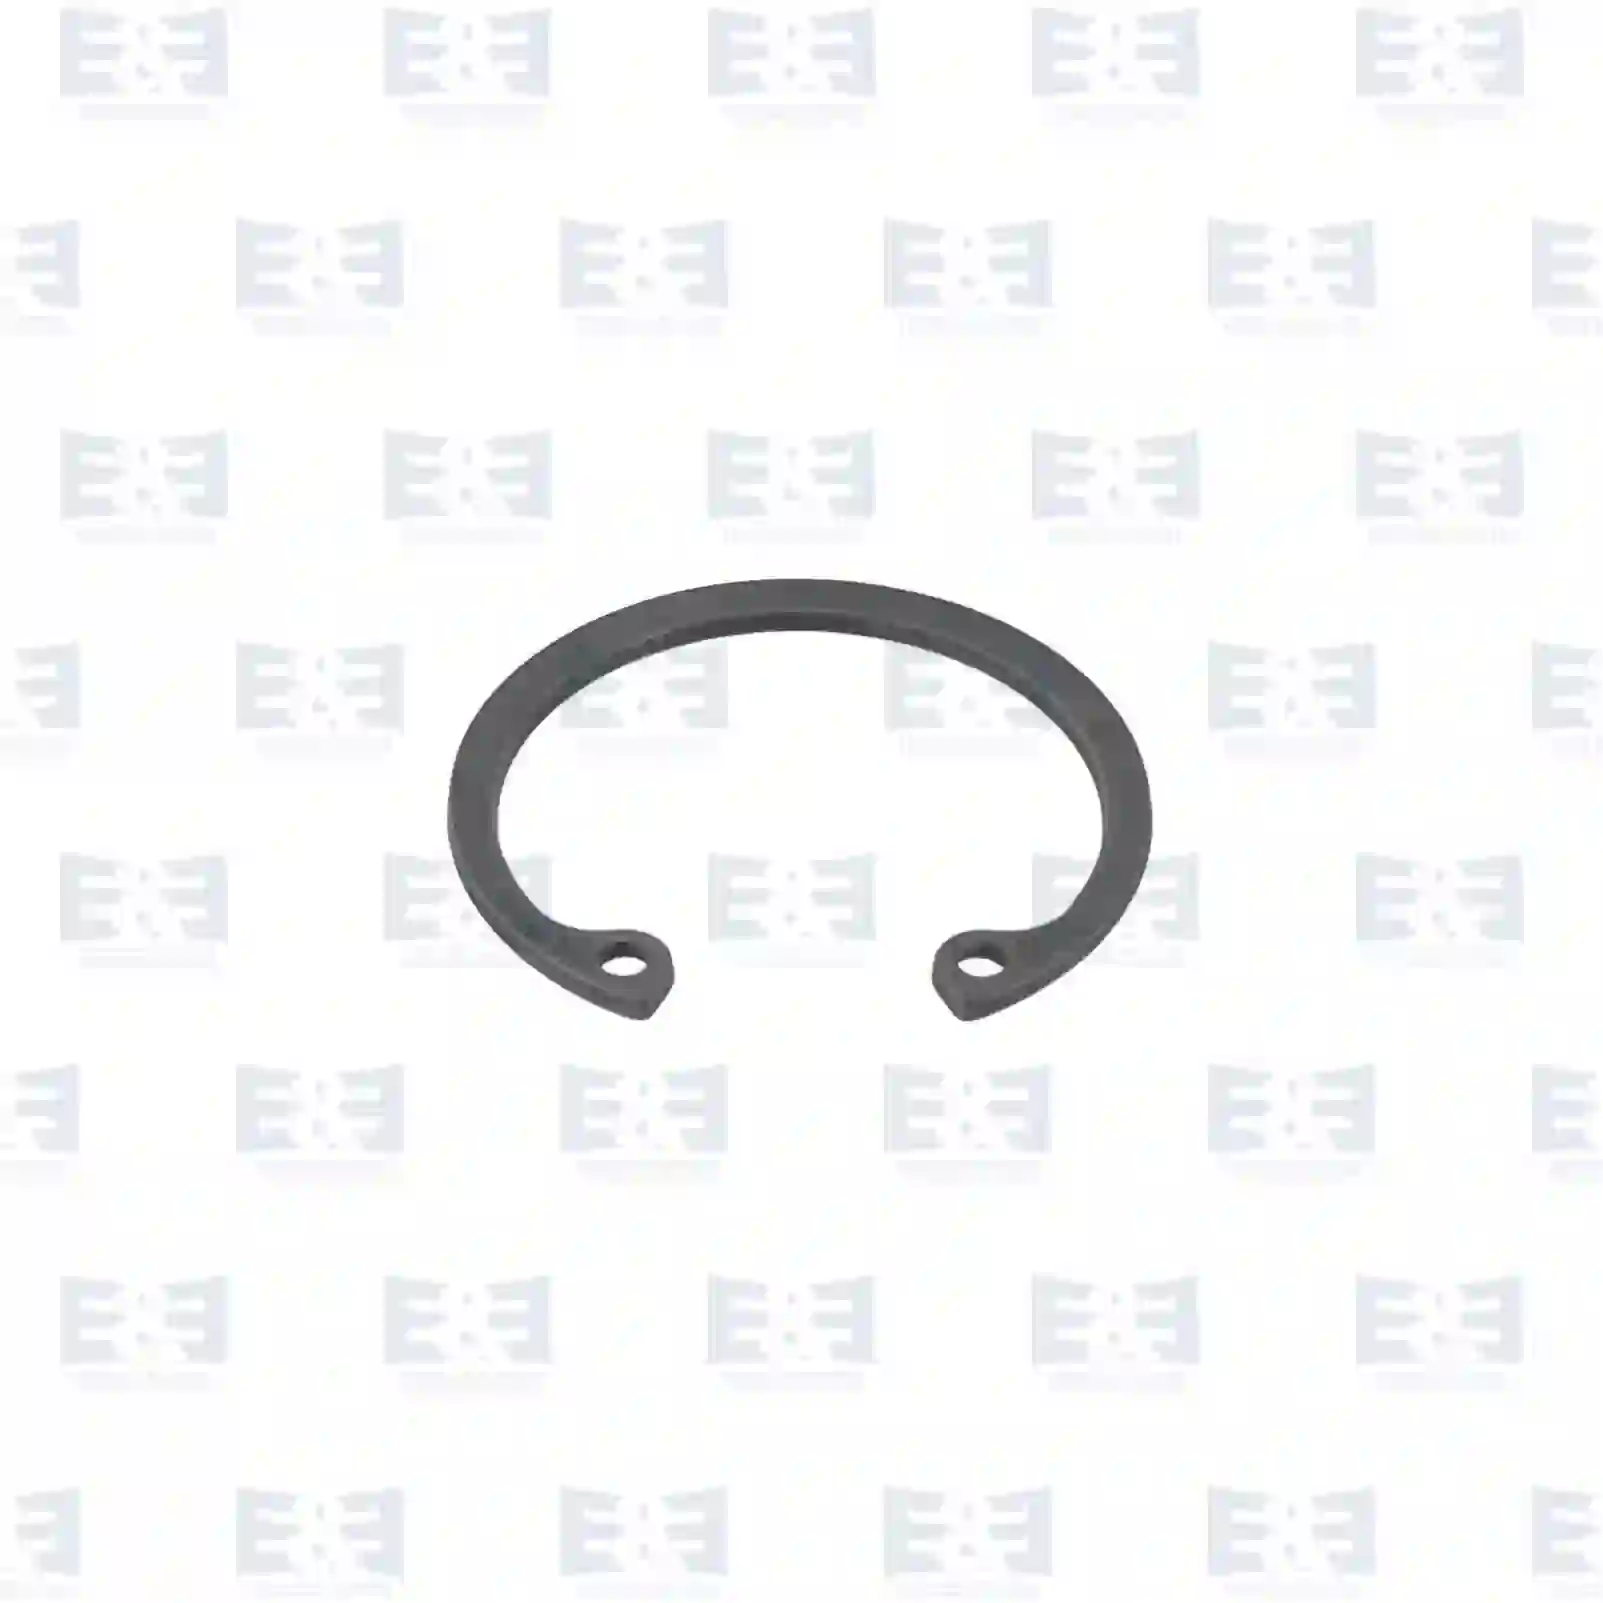  Lock ring || E&E Truck Spare Parts | Truck Spare Parts, Auotomotive Spare Parts